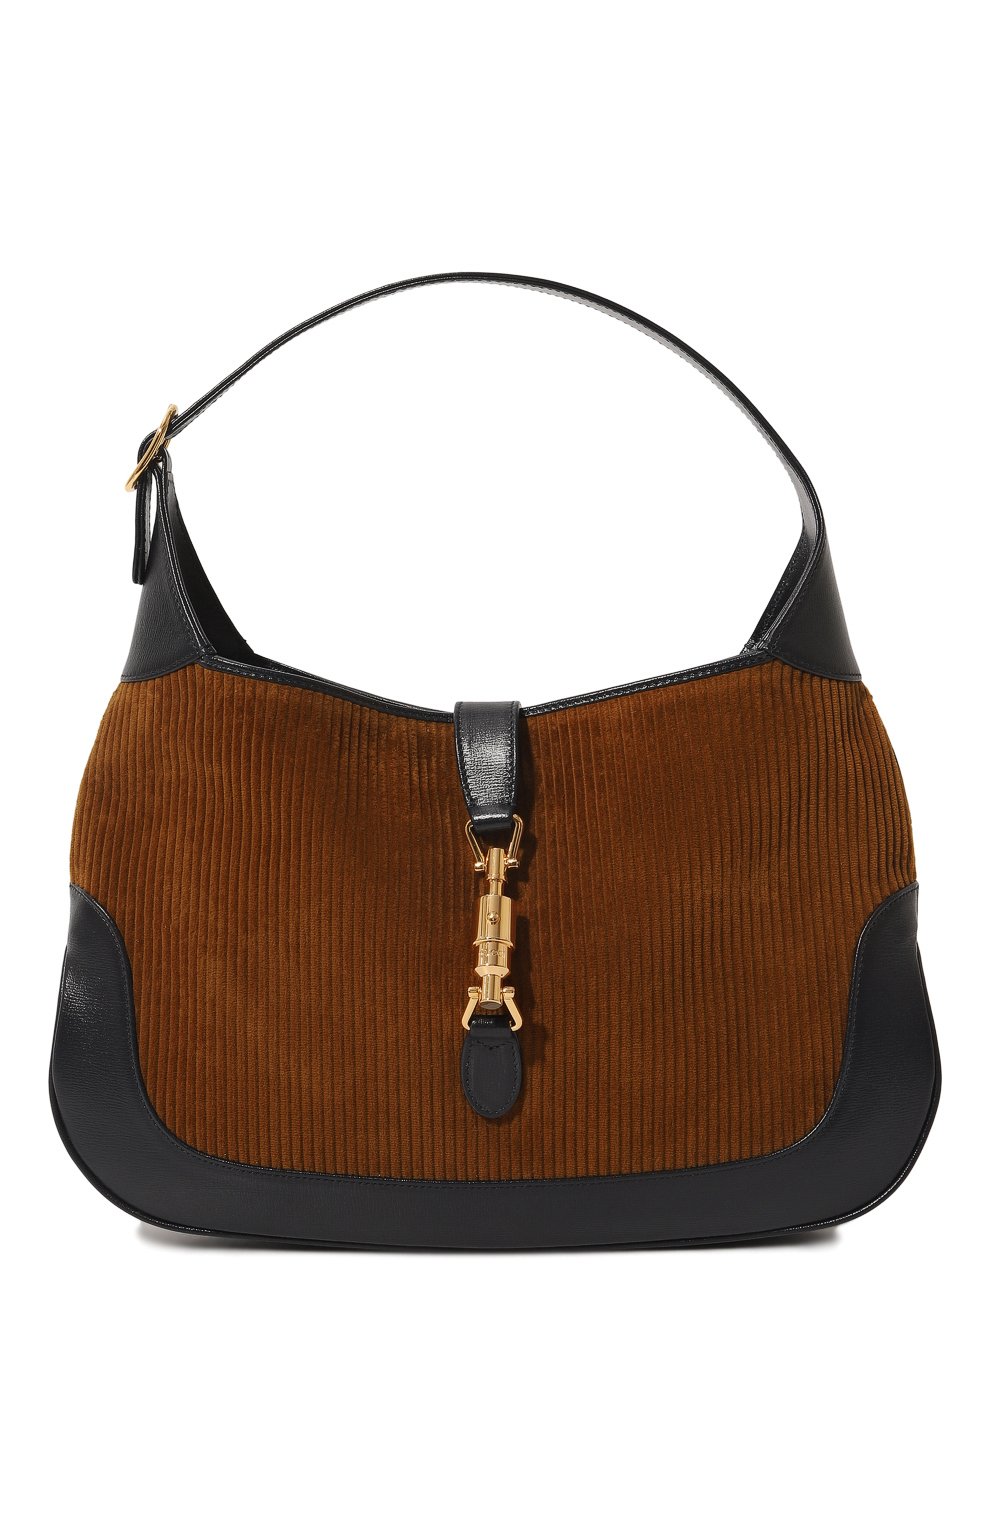 Женская сумка jackie 1961 medium GUCCI коричневого цвета, арт. 636710 2S8AG | Фото 1 (Сумки-технические: Сумки top-handle; Размер: medium; Материал: Текстиль)